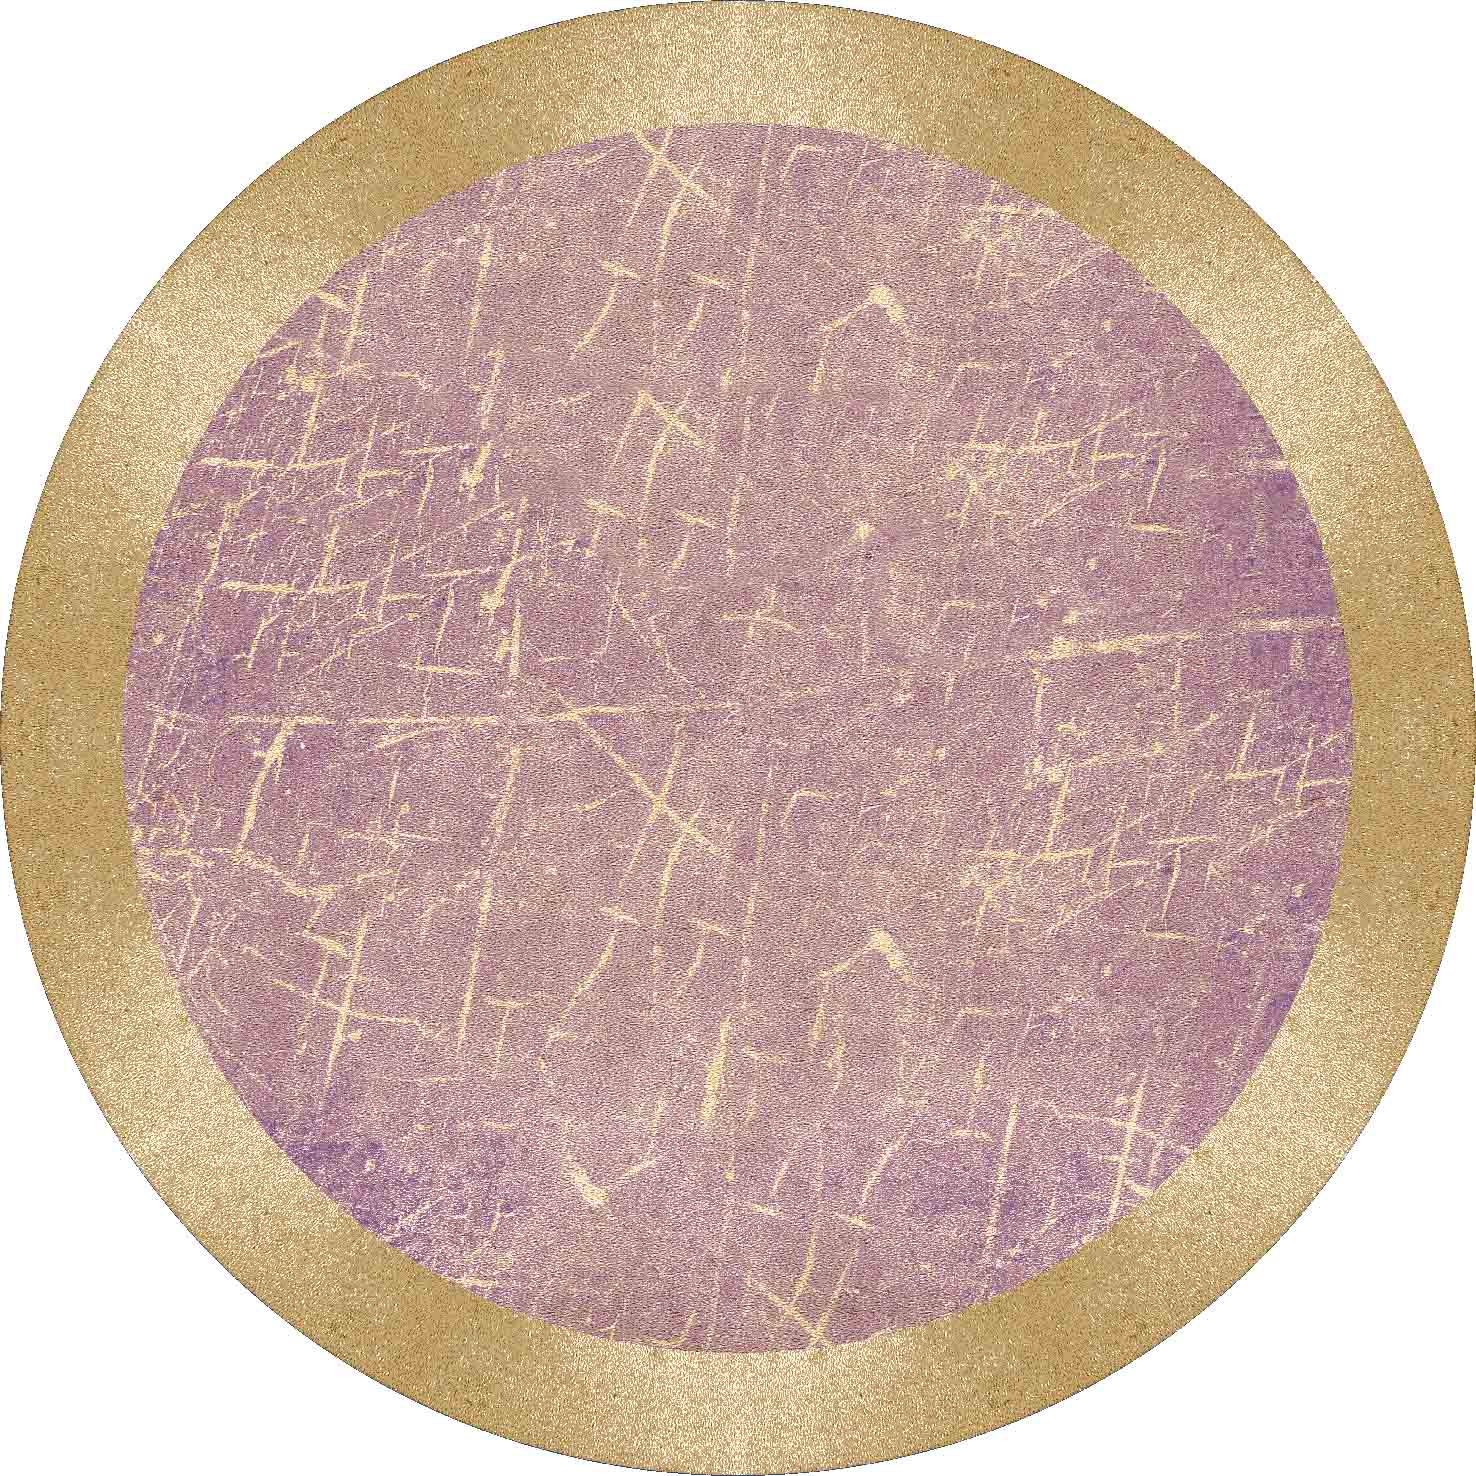 Round rug - Roges (pink/gold)